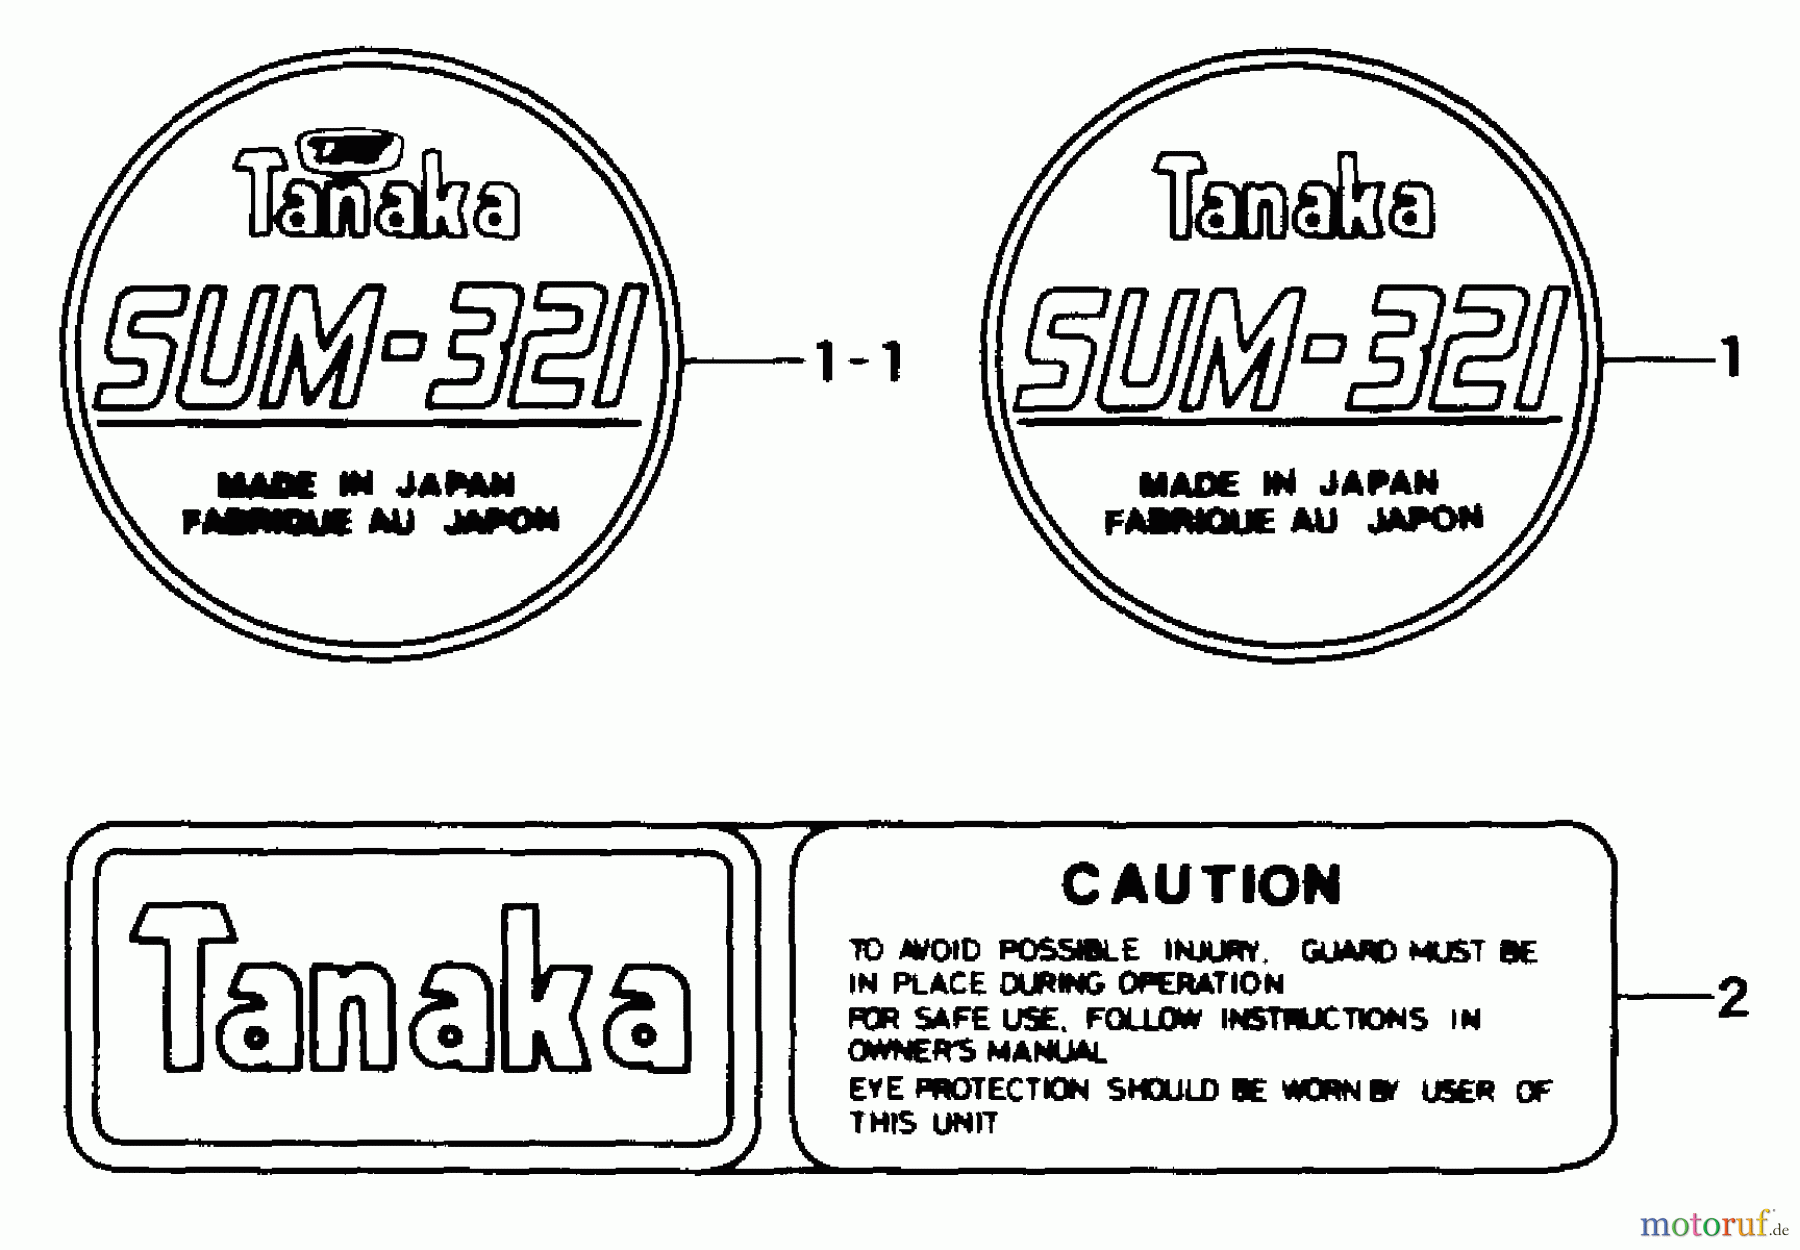  Tanaka Trimmer, Motorsensen SUM-321 - Tanaka Backpack Brush Cutter Marks